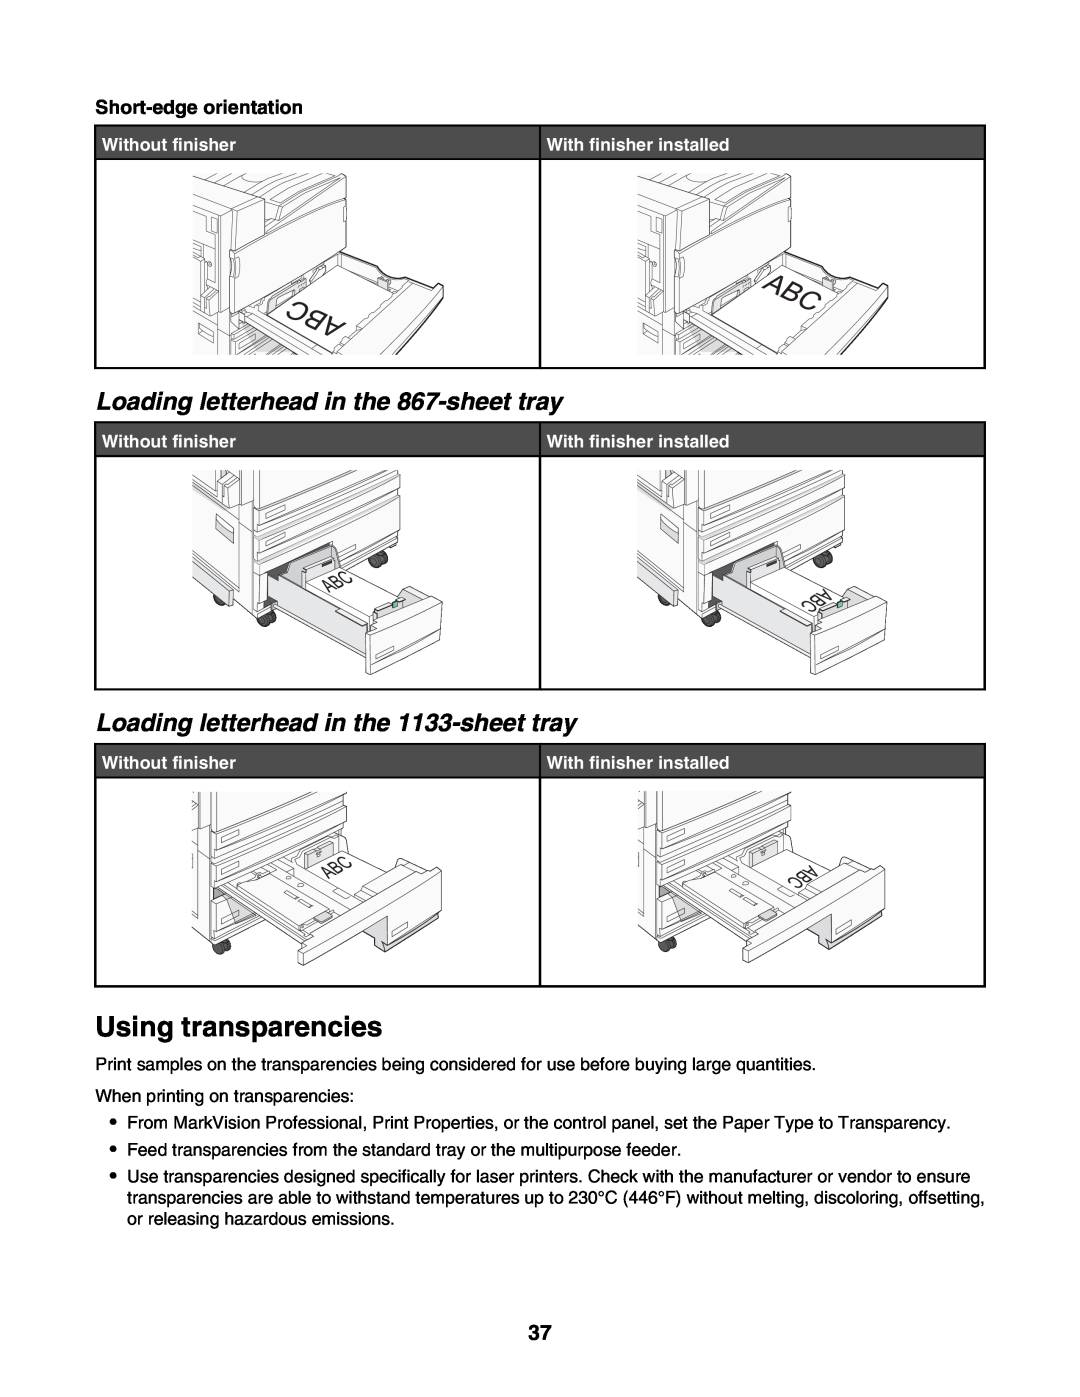 Lexmark C935 Using transparencies, Loading letterhead in the 867-sheet tray, Loading letterhead in the 1133-sheet tray 